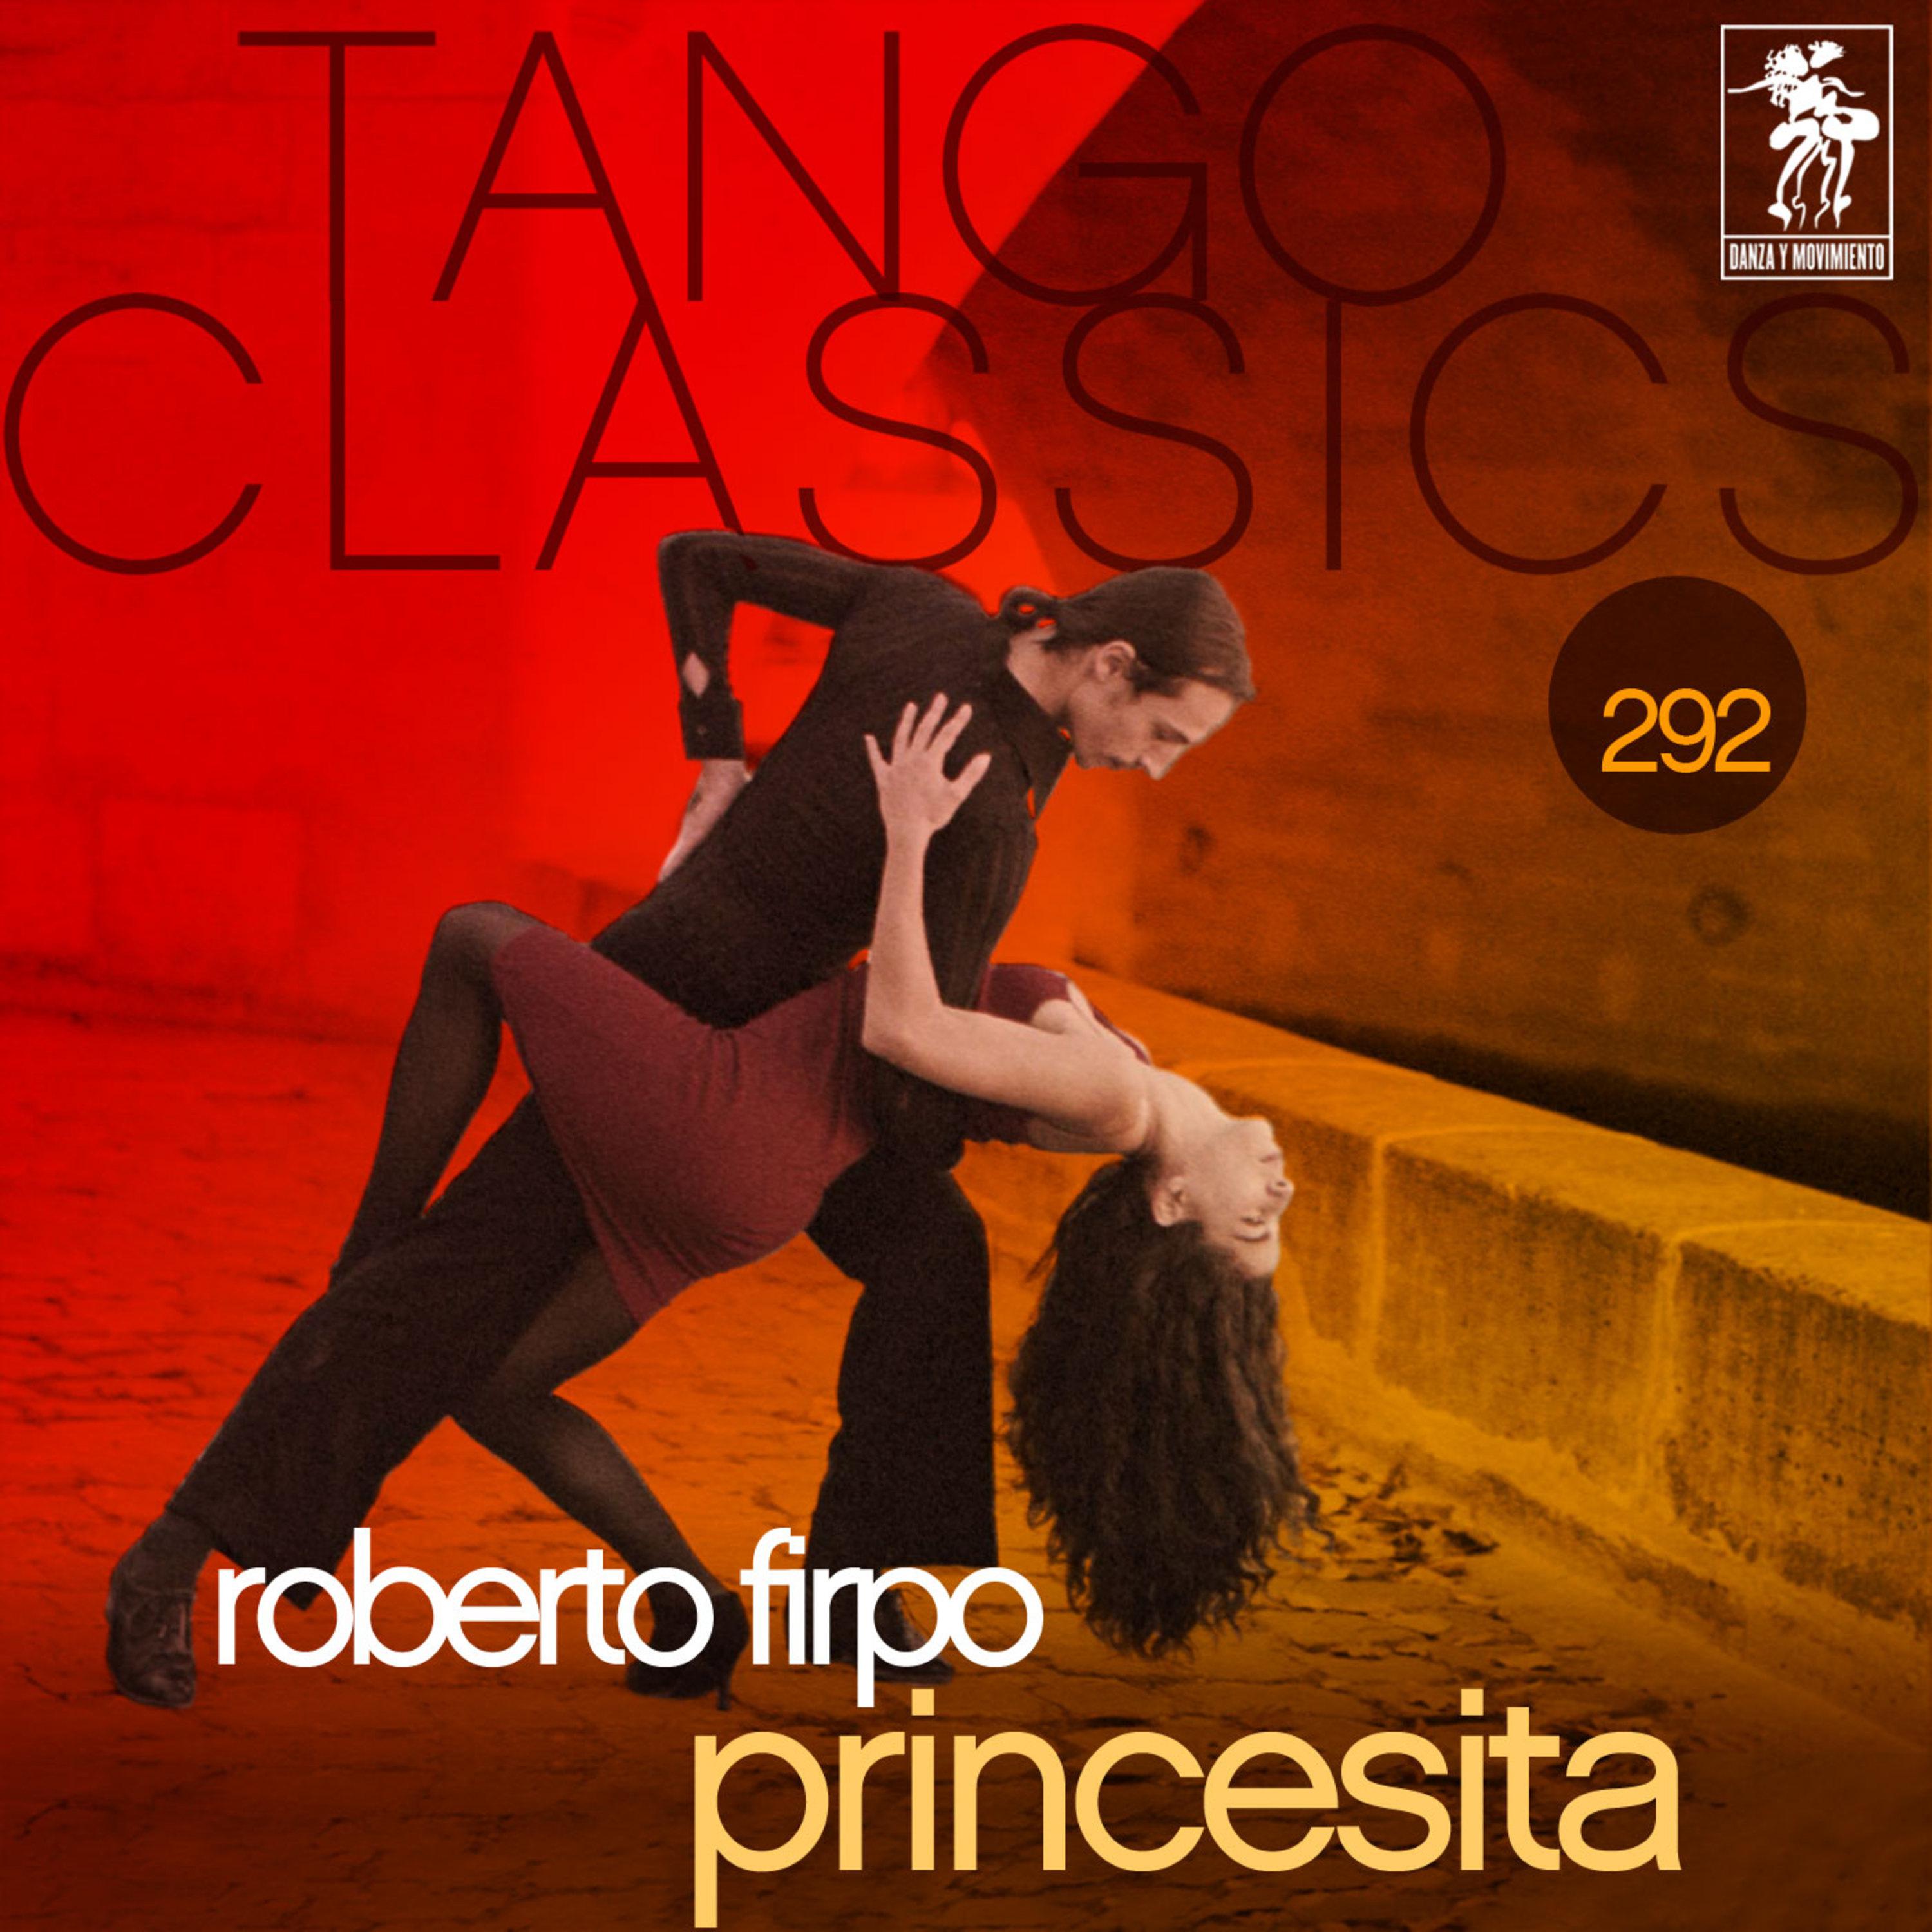 Tango Classics 292: Princesita